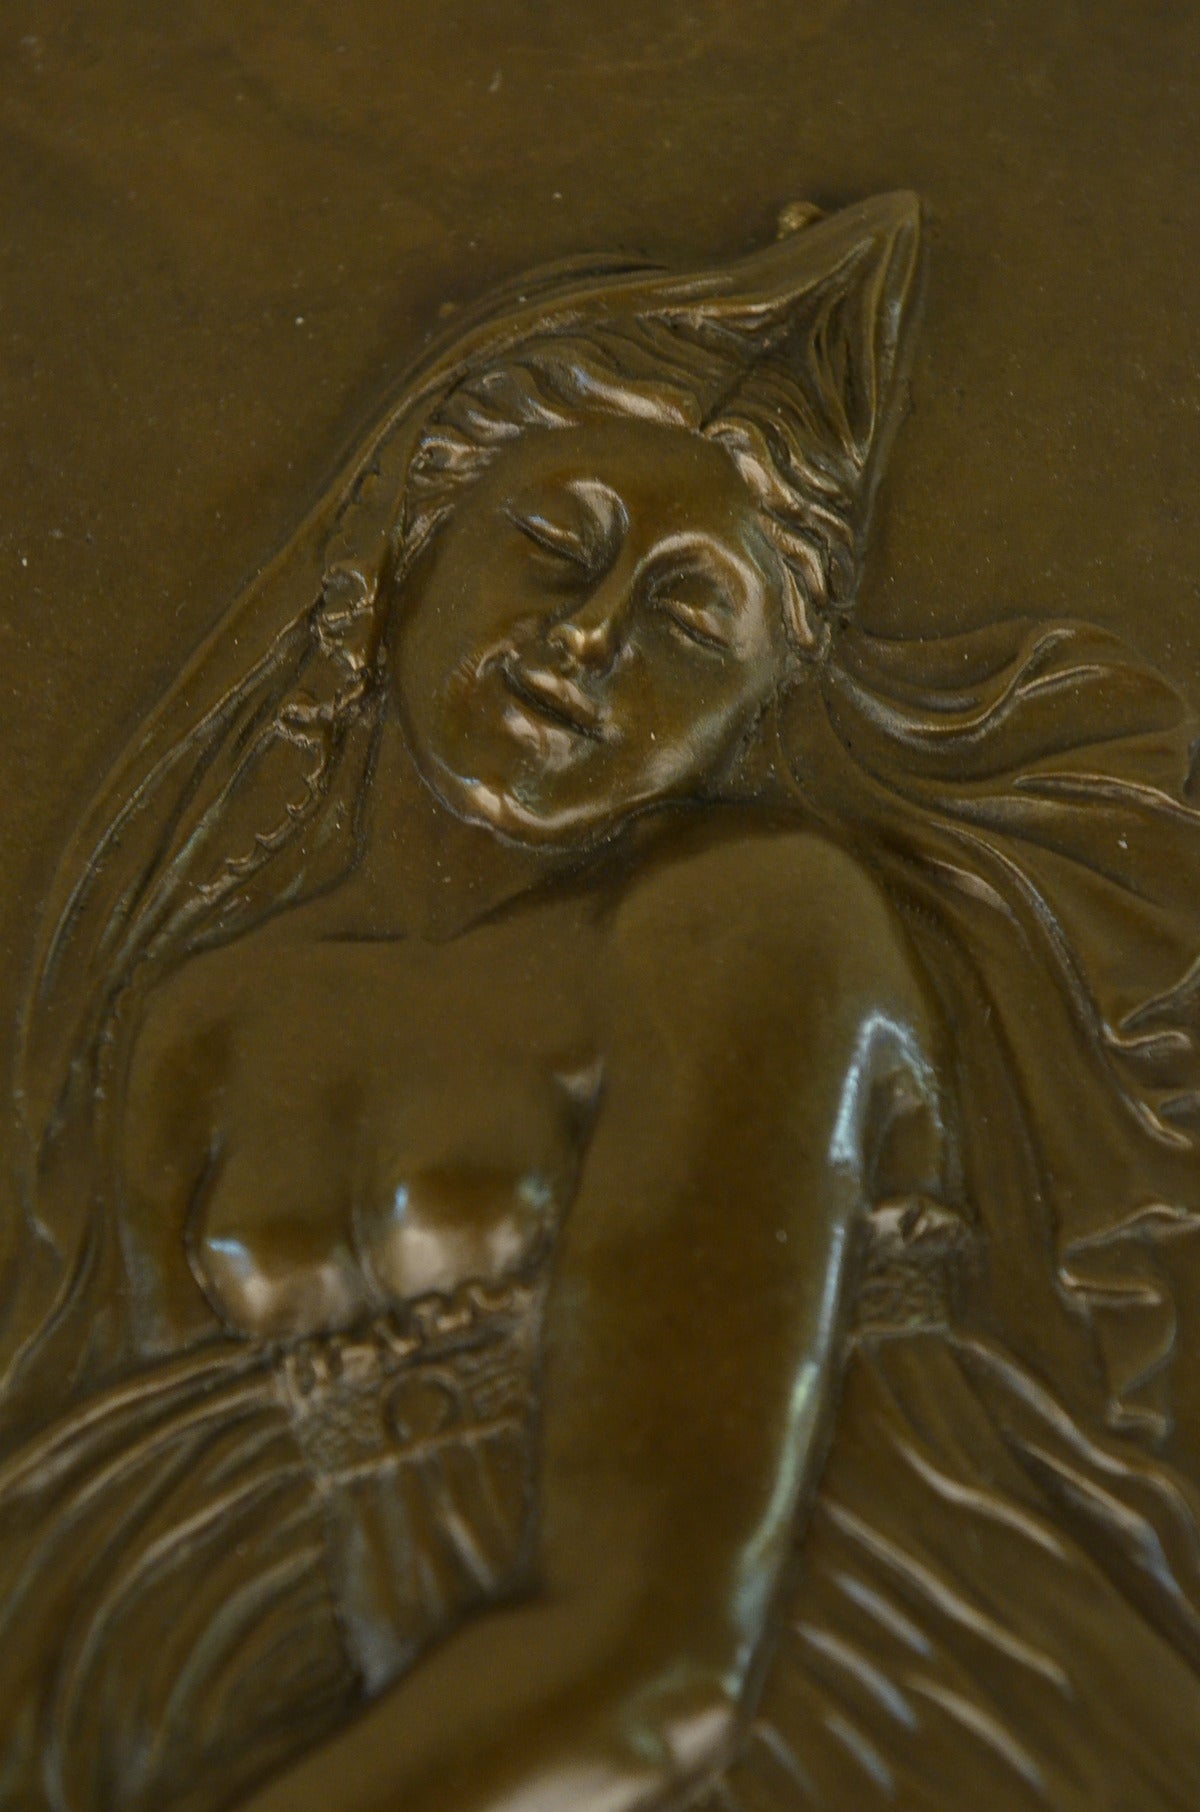 Handcrafted bronze sculpture SALE Wal Lrge Vitaleh Aldo Artist Italian Original